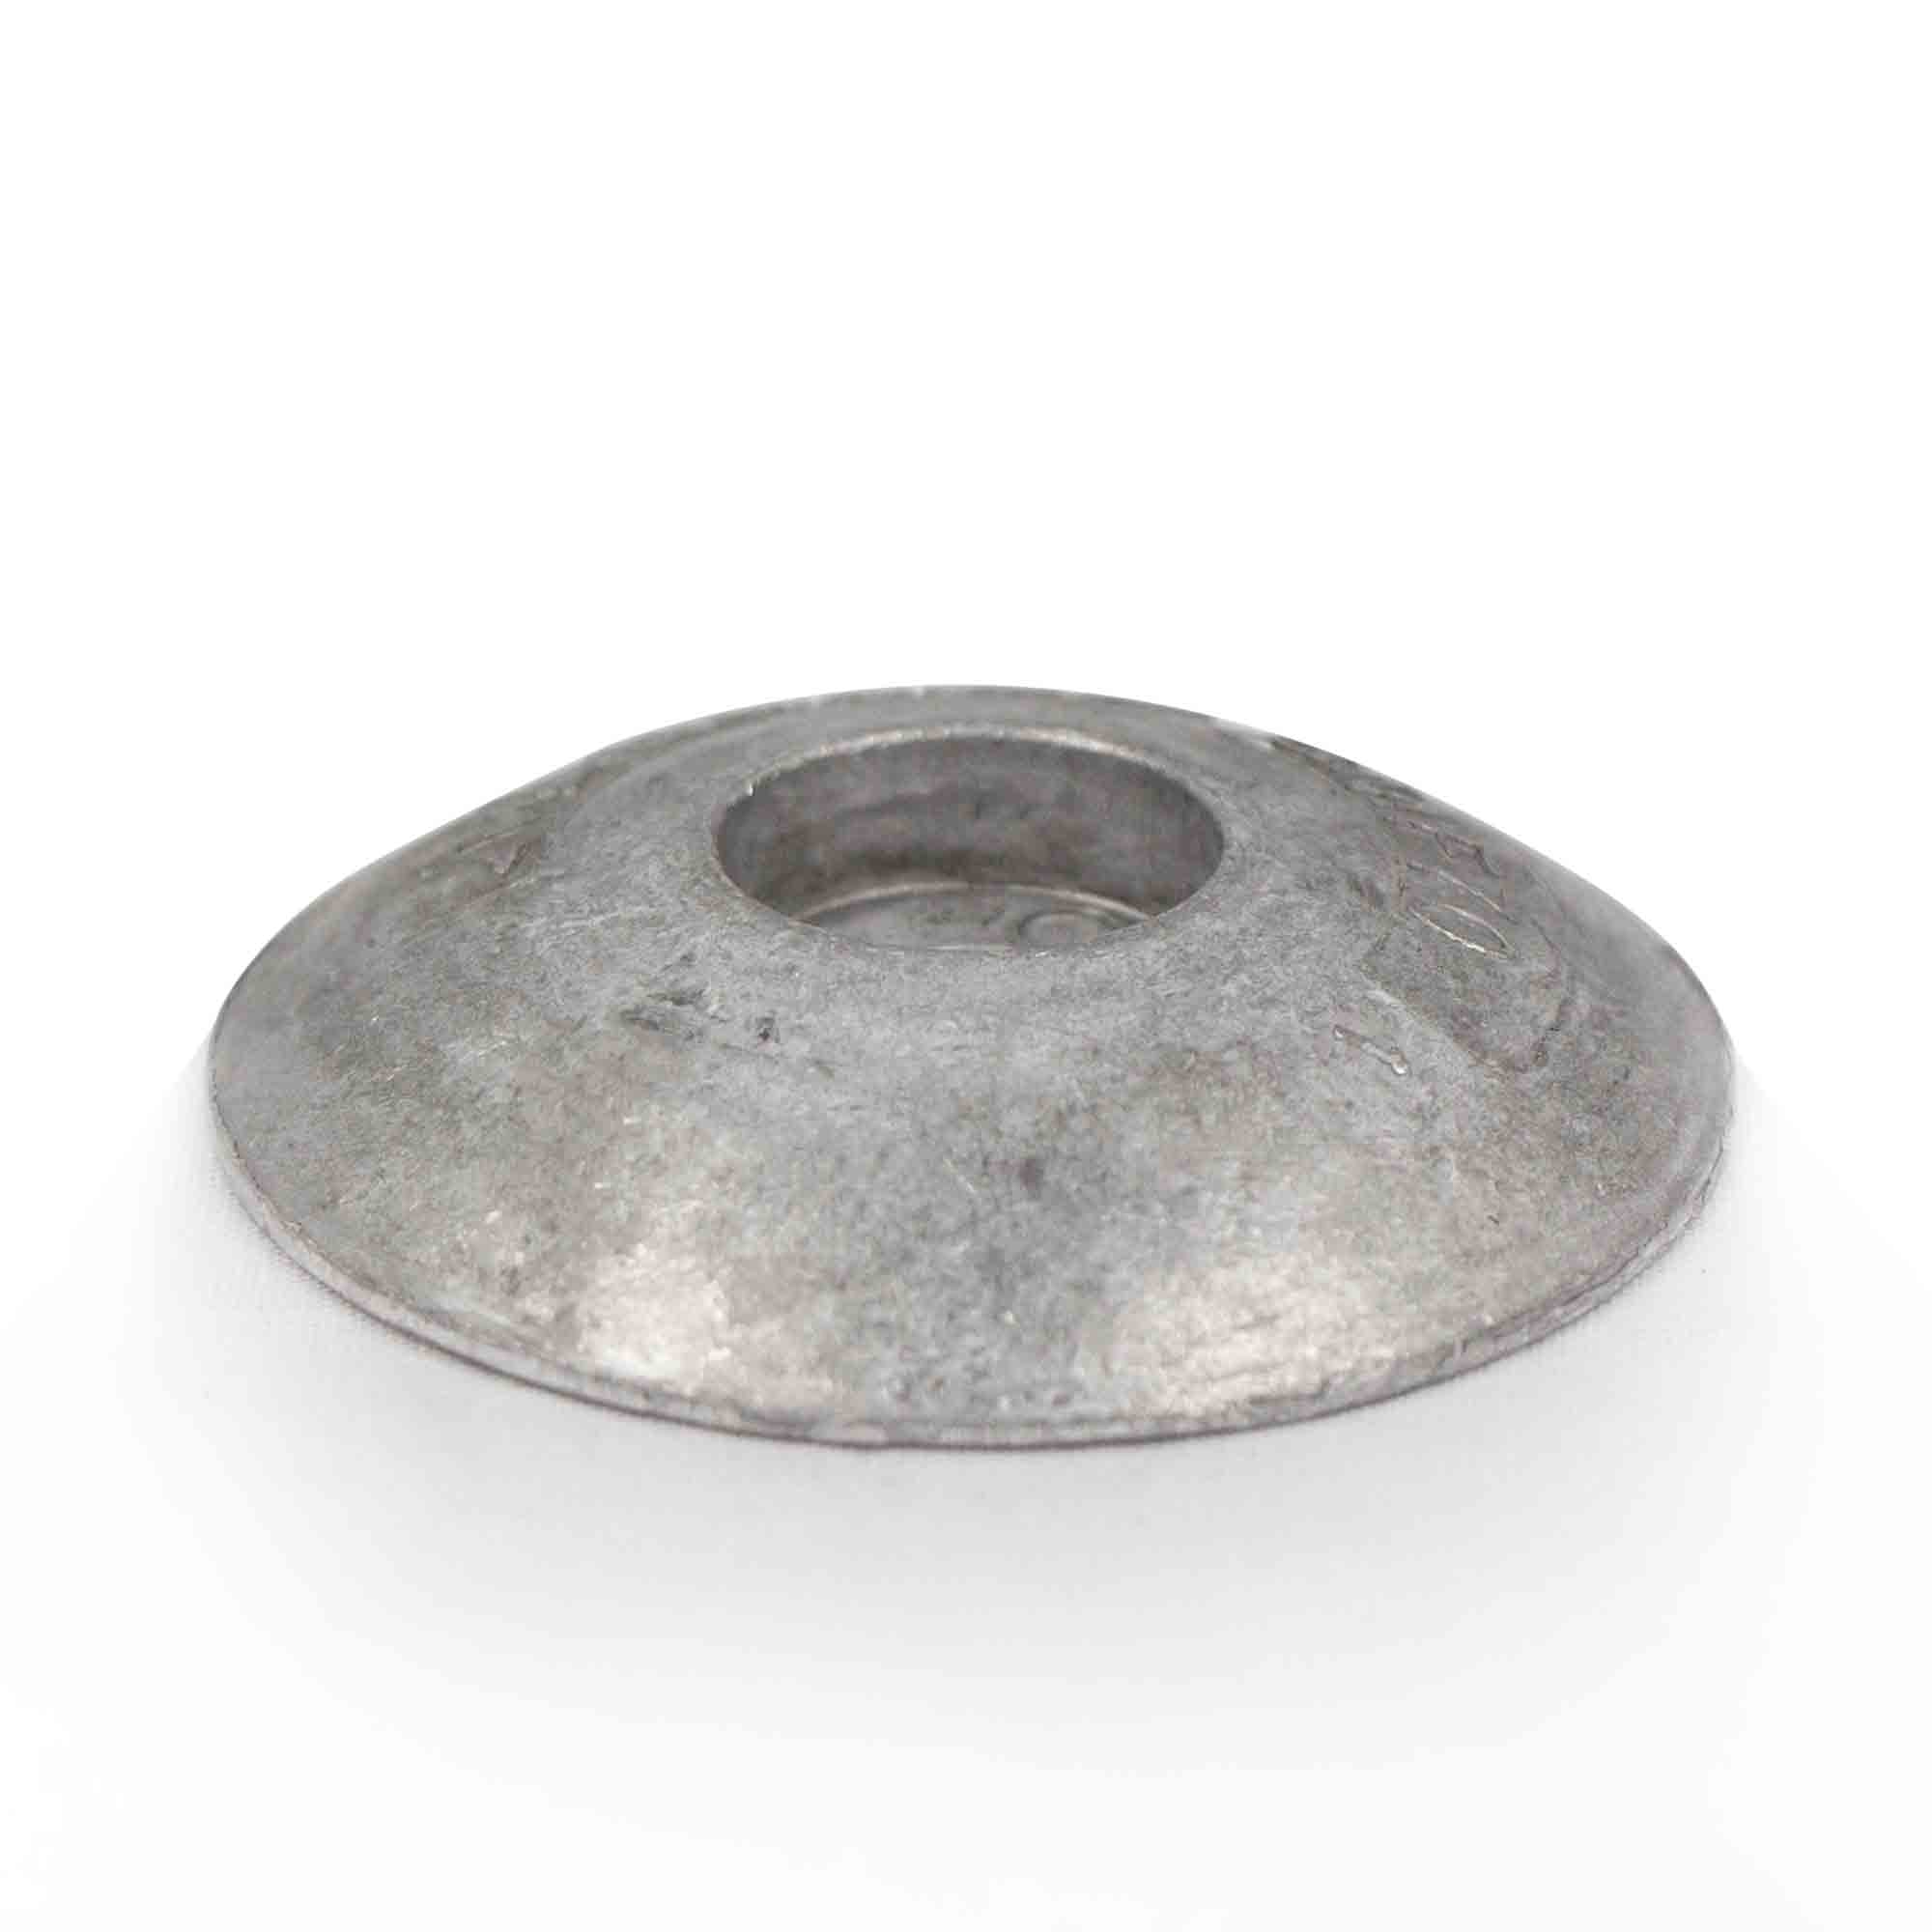 Alloy Rudder/Trim Tab Disc Anode, Aluminum, 3-1/2" - FO4171